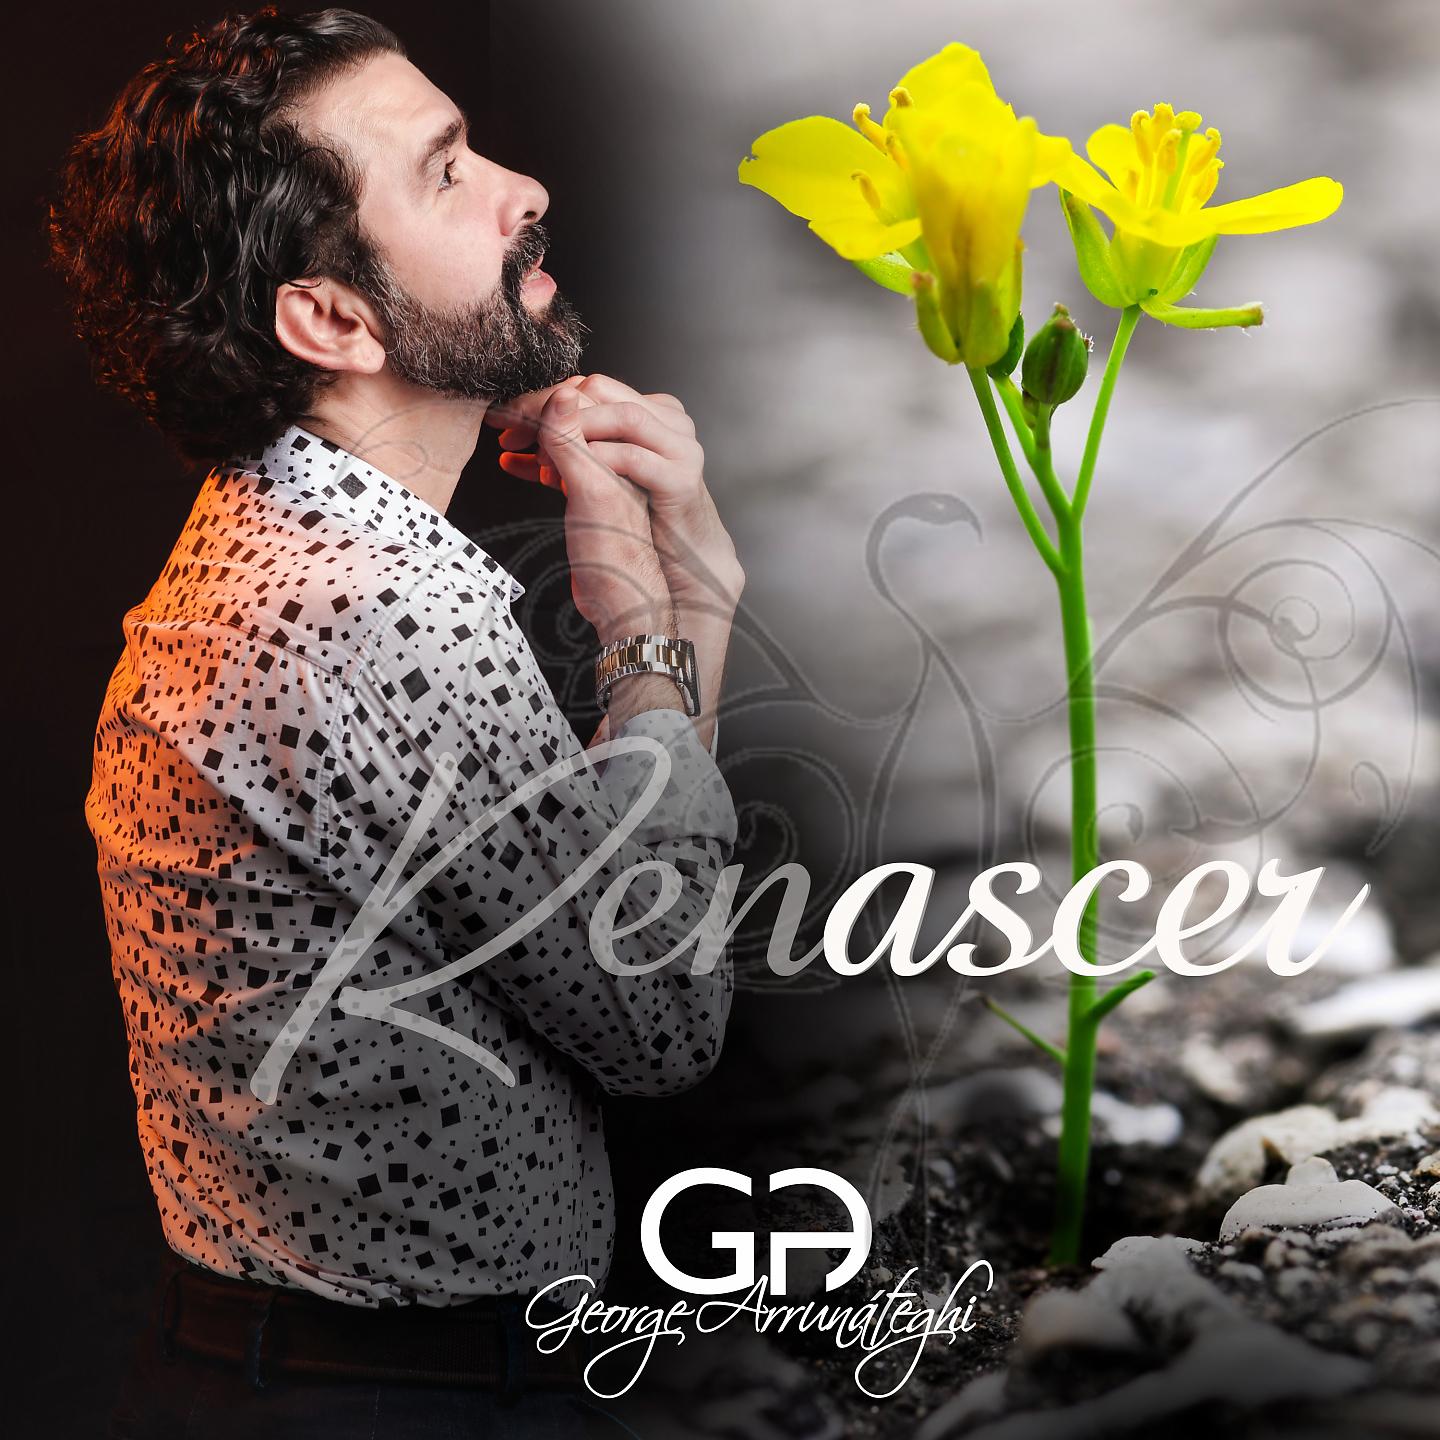 Постер альбома Renascer